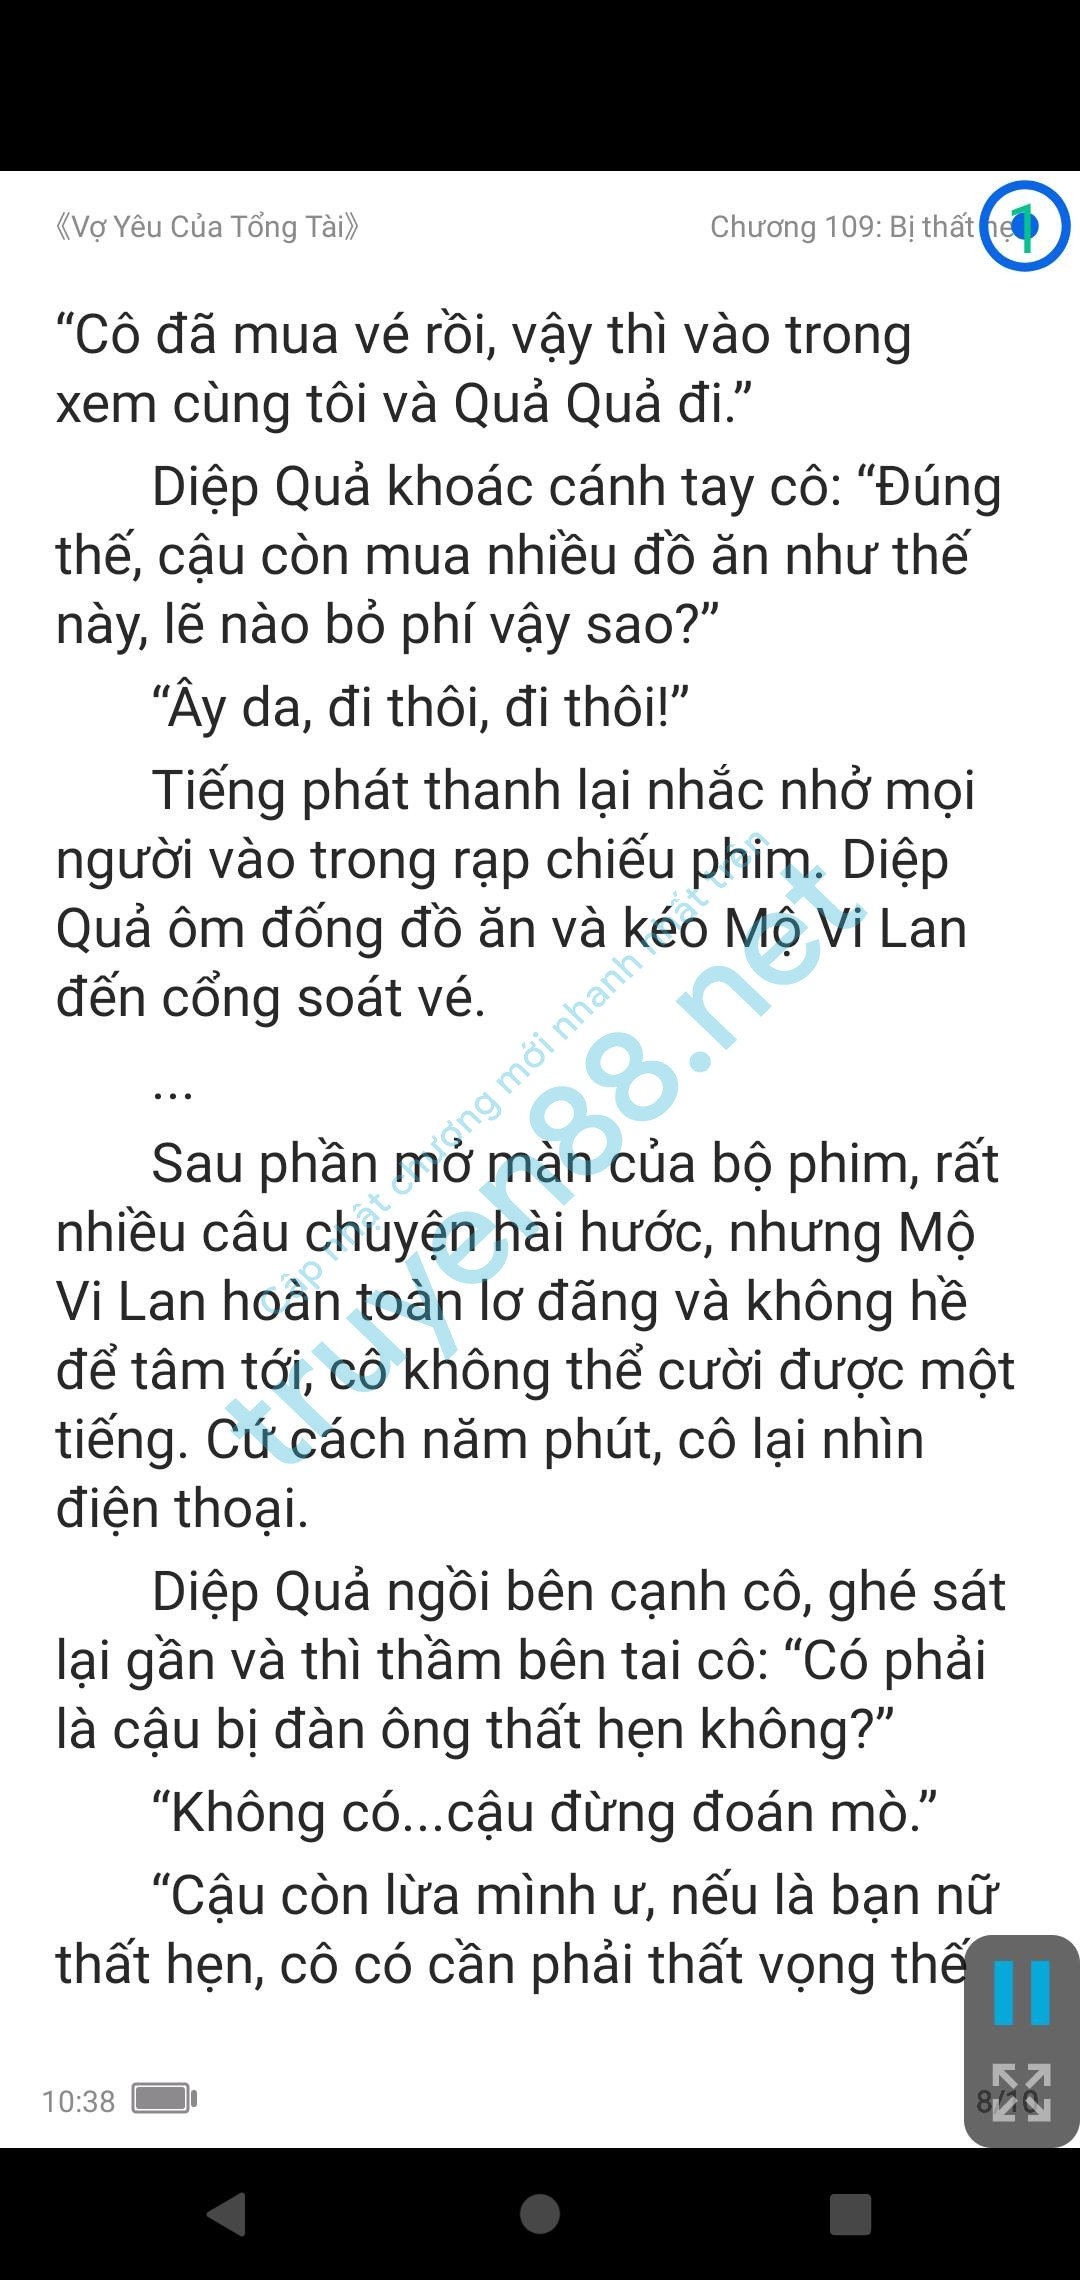 vo-yeu-cua-tong-tai-mo-vi-lan--pho-han-tranh-109-0